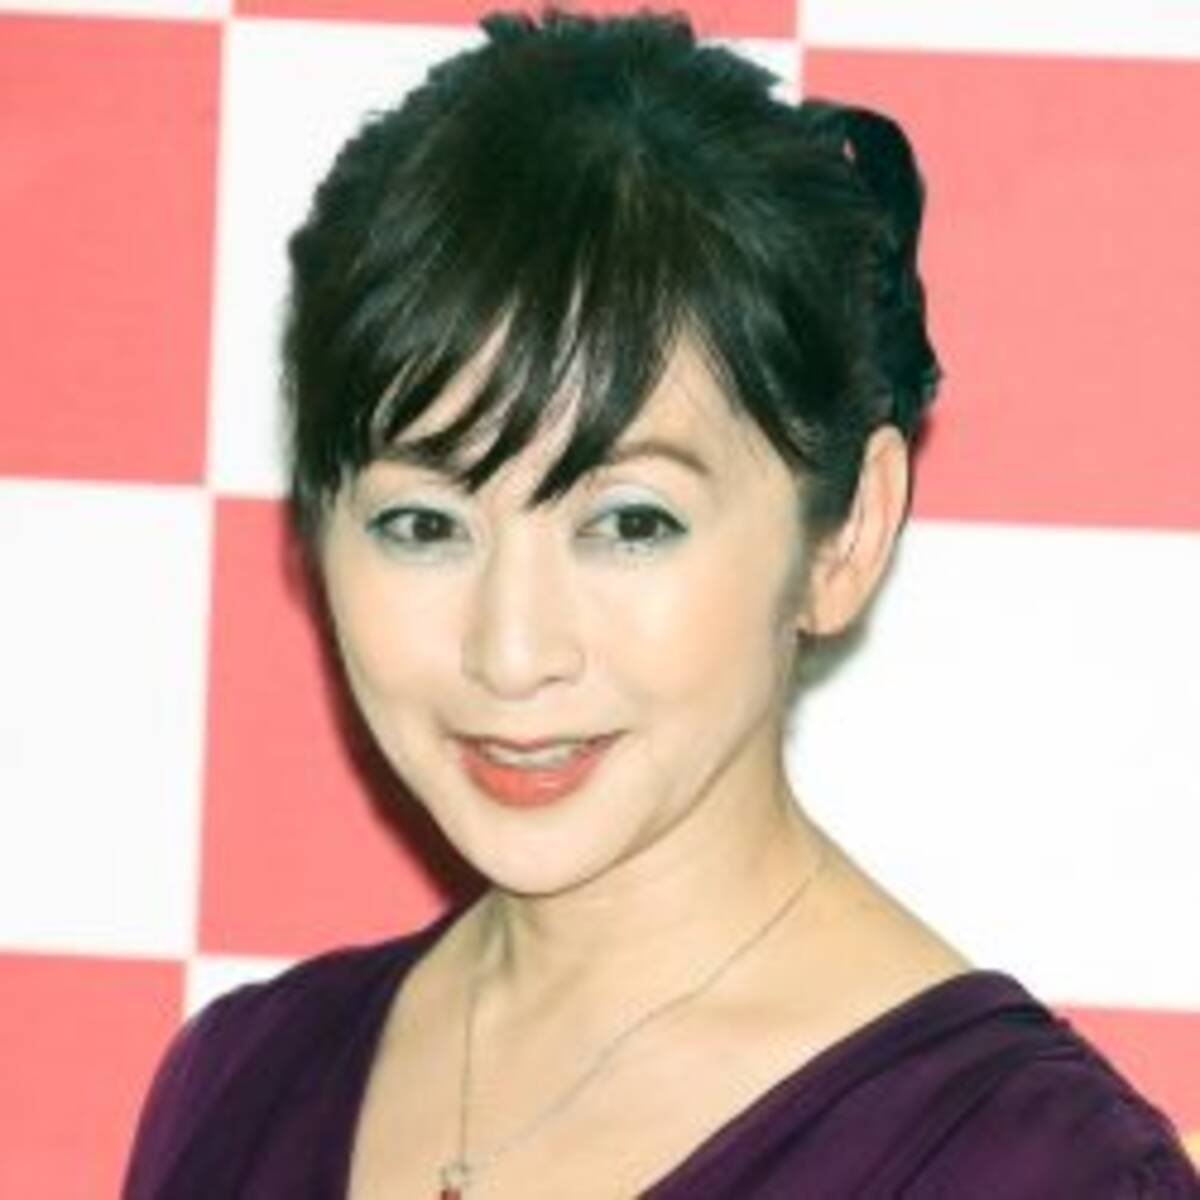 Gバスト も斉藤由貴似 長女の女優デビューで懸念される 魔性の女 継承 22年3月25日 エキサイトニュース